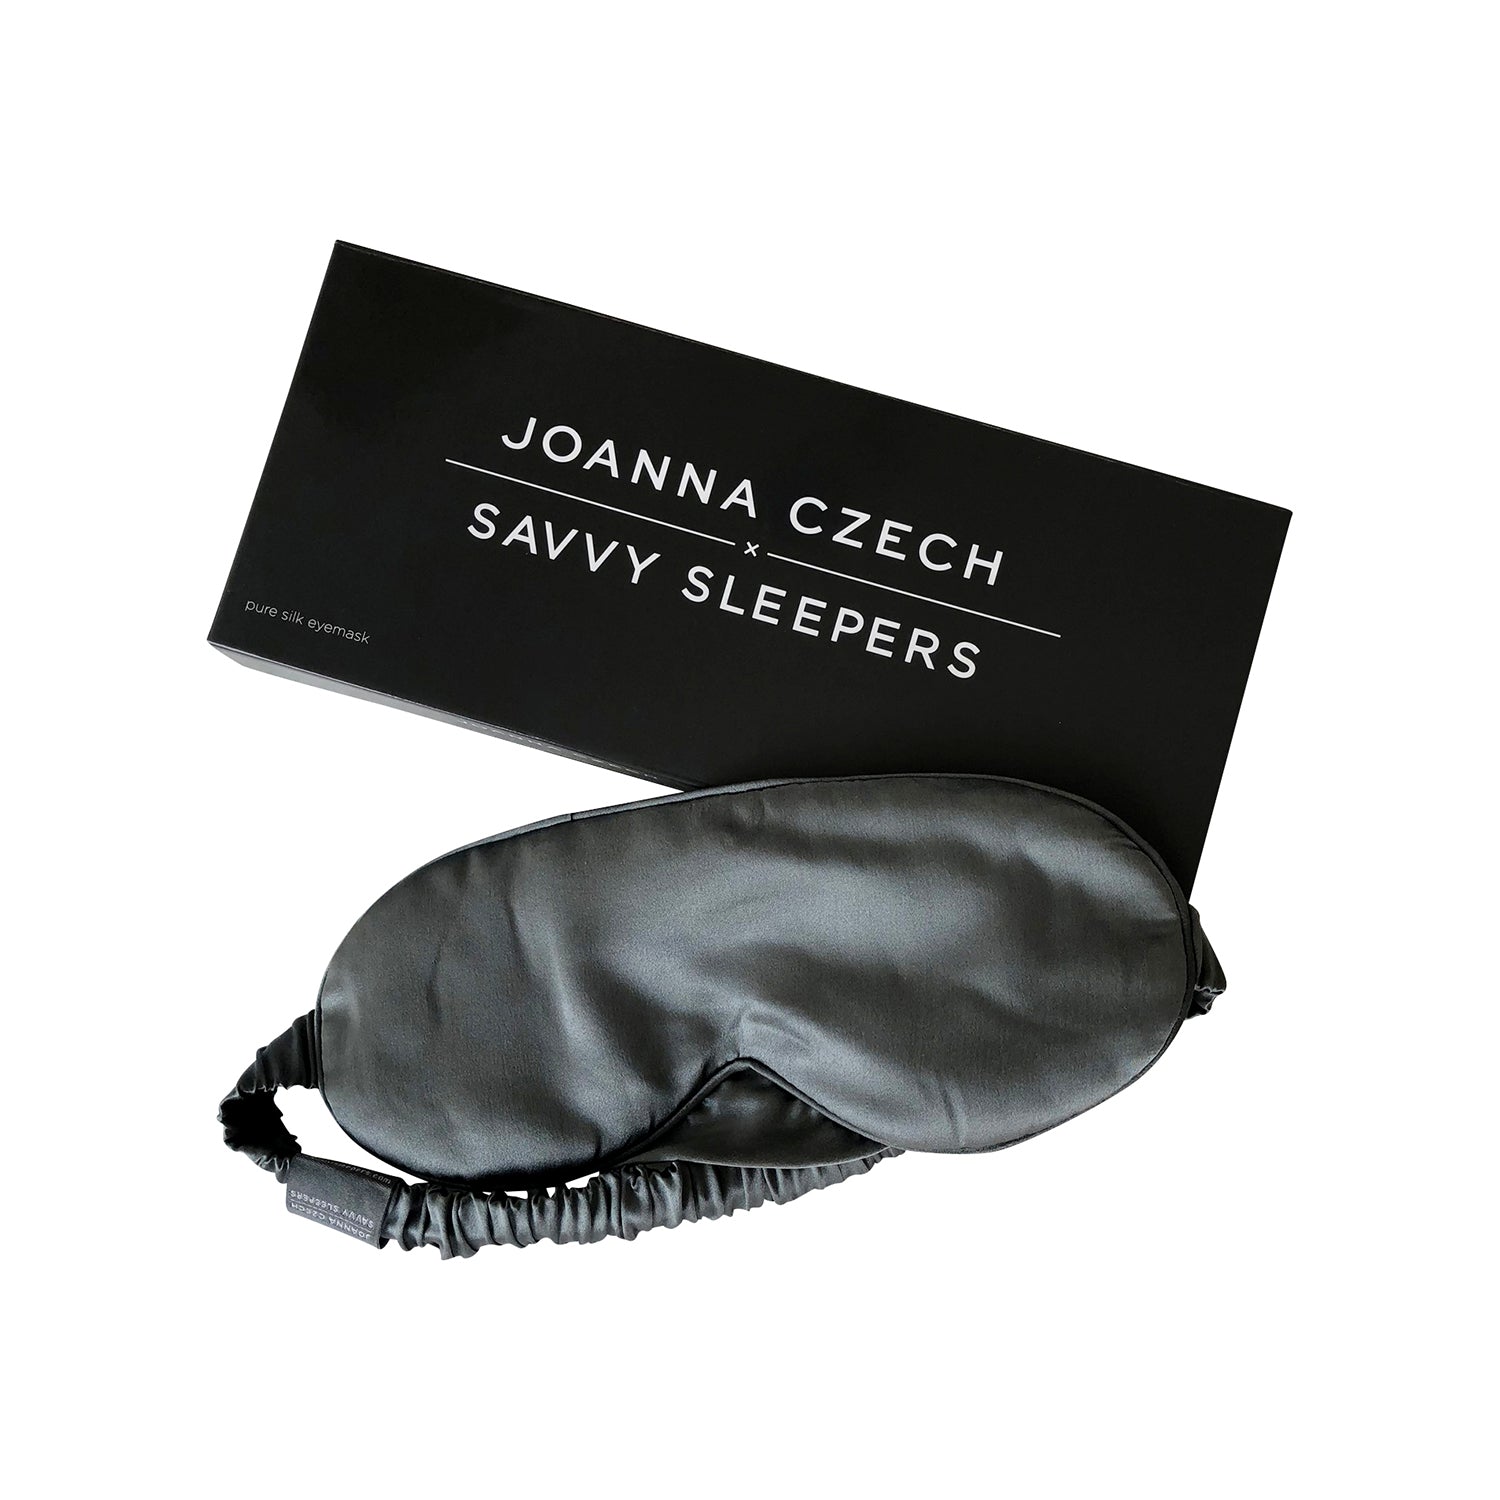 Chanel Travel Set Blanket & Sleep Eye Mask Black/Grey Wool/Silk – Coco  Approved Studio